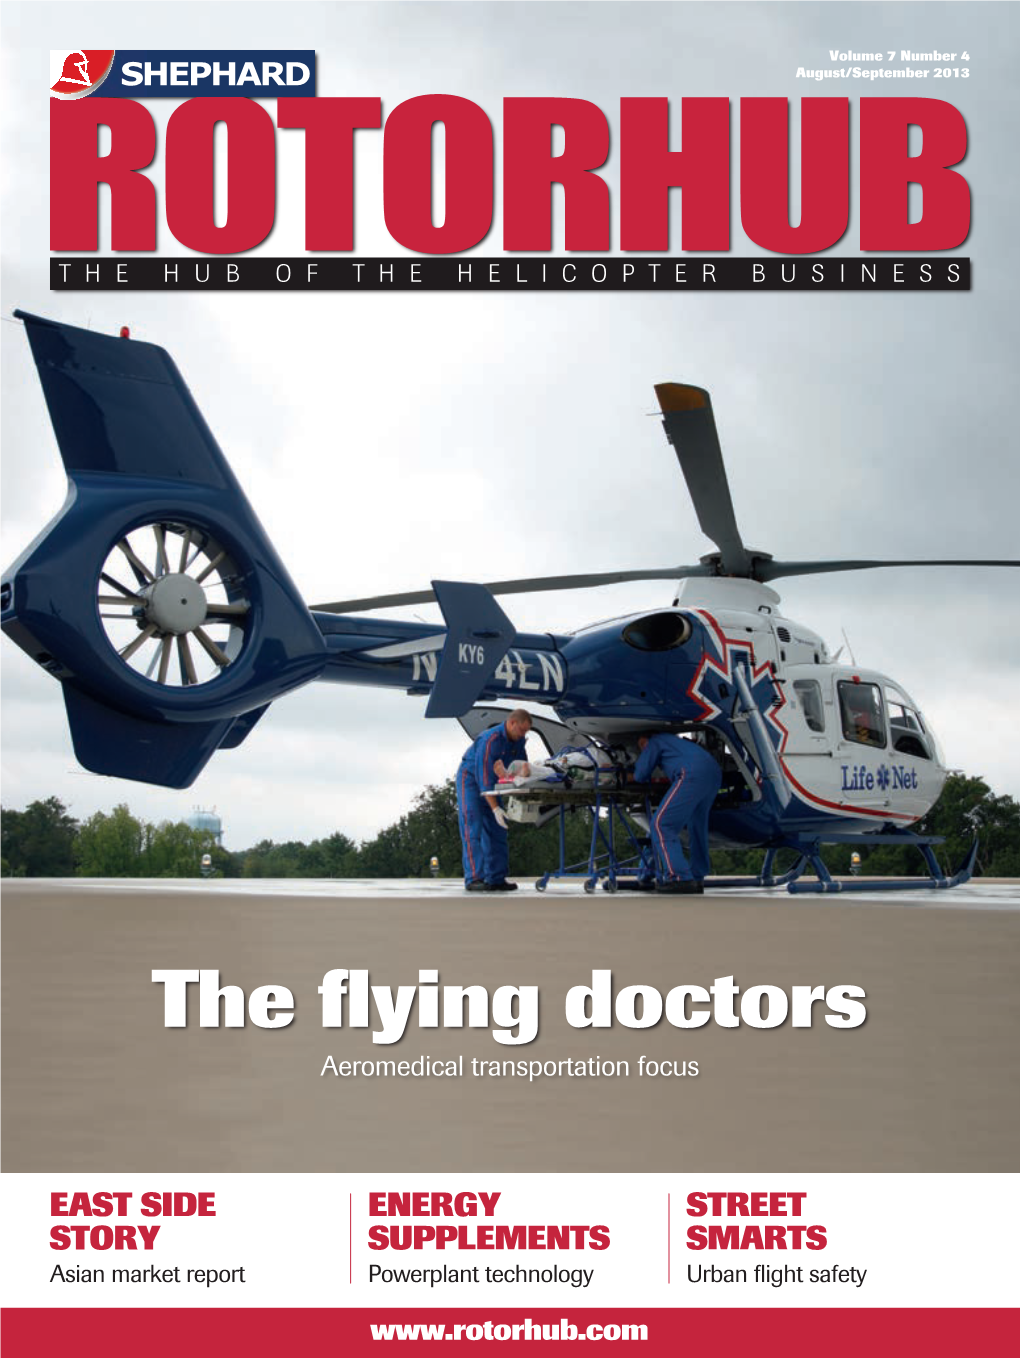 The Flying Doctors Aeromedical Transportation Focus